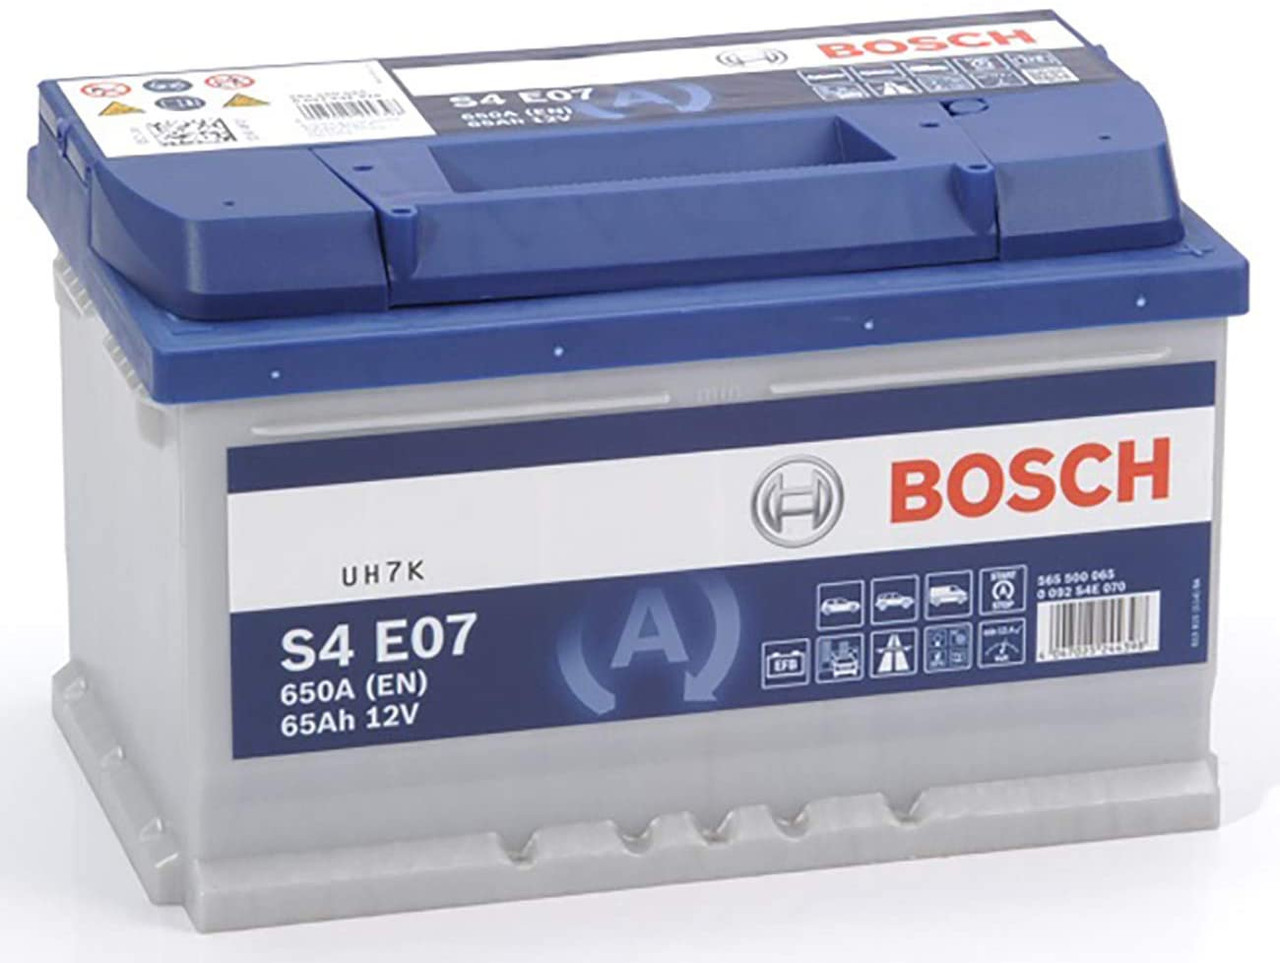 Buy Online Bosch Automotive and Starter Battery 60AH 12V GZ Industrial  Supplies Nigeria